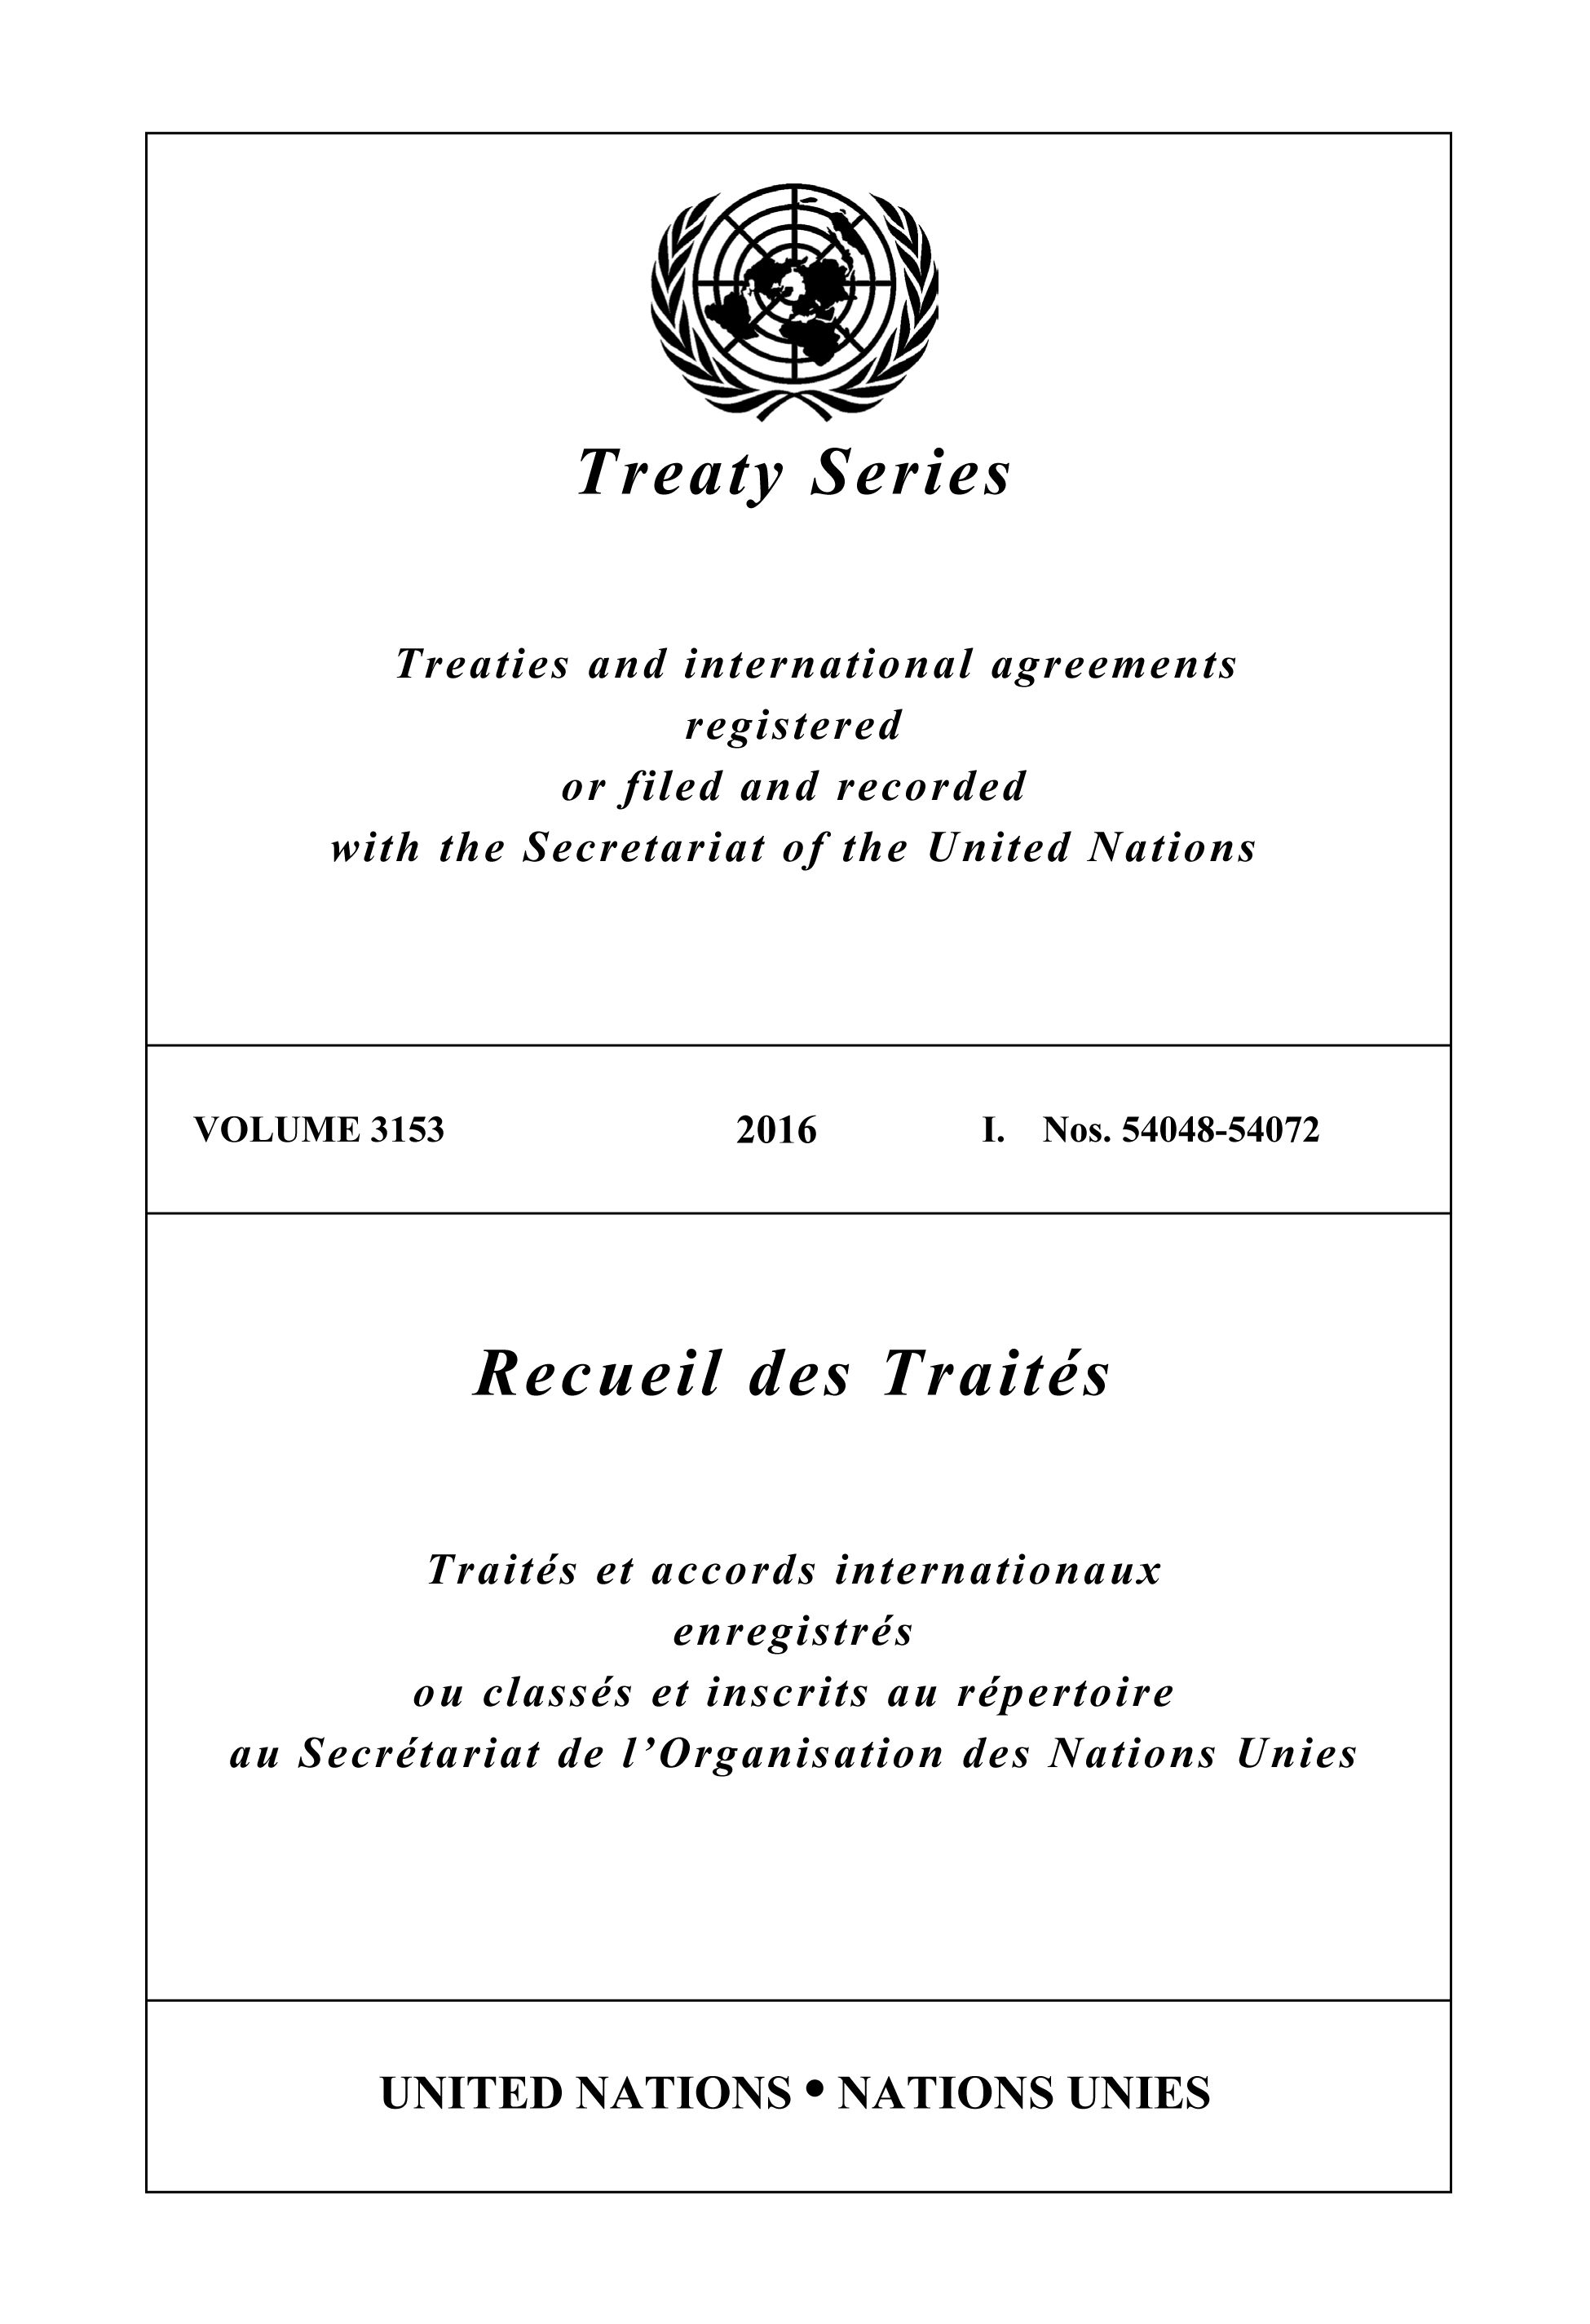 image of Treaty Series 3153